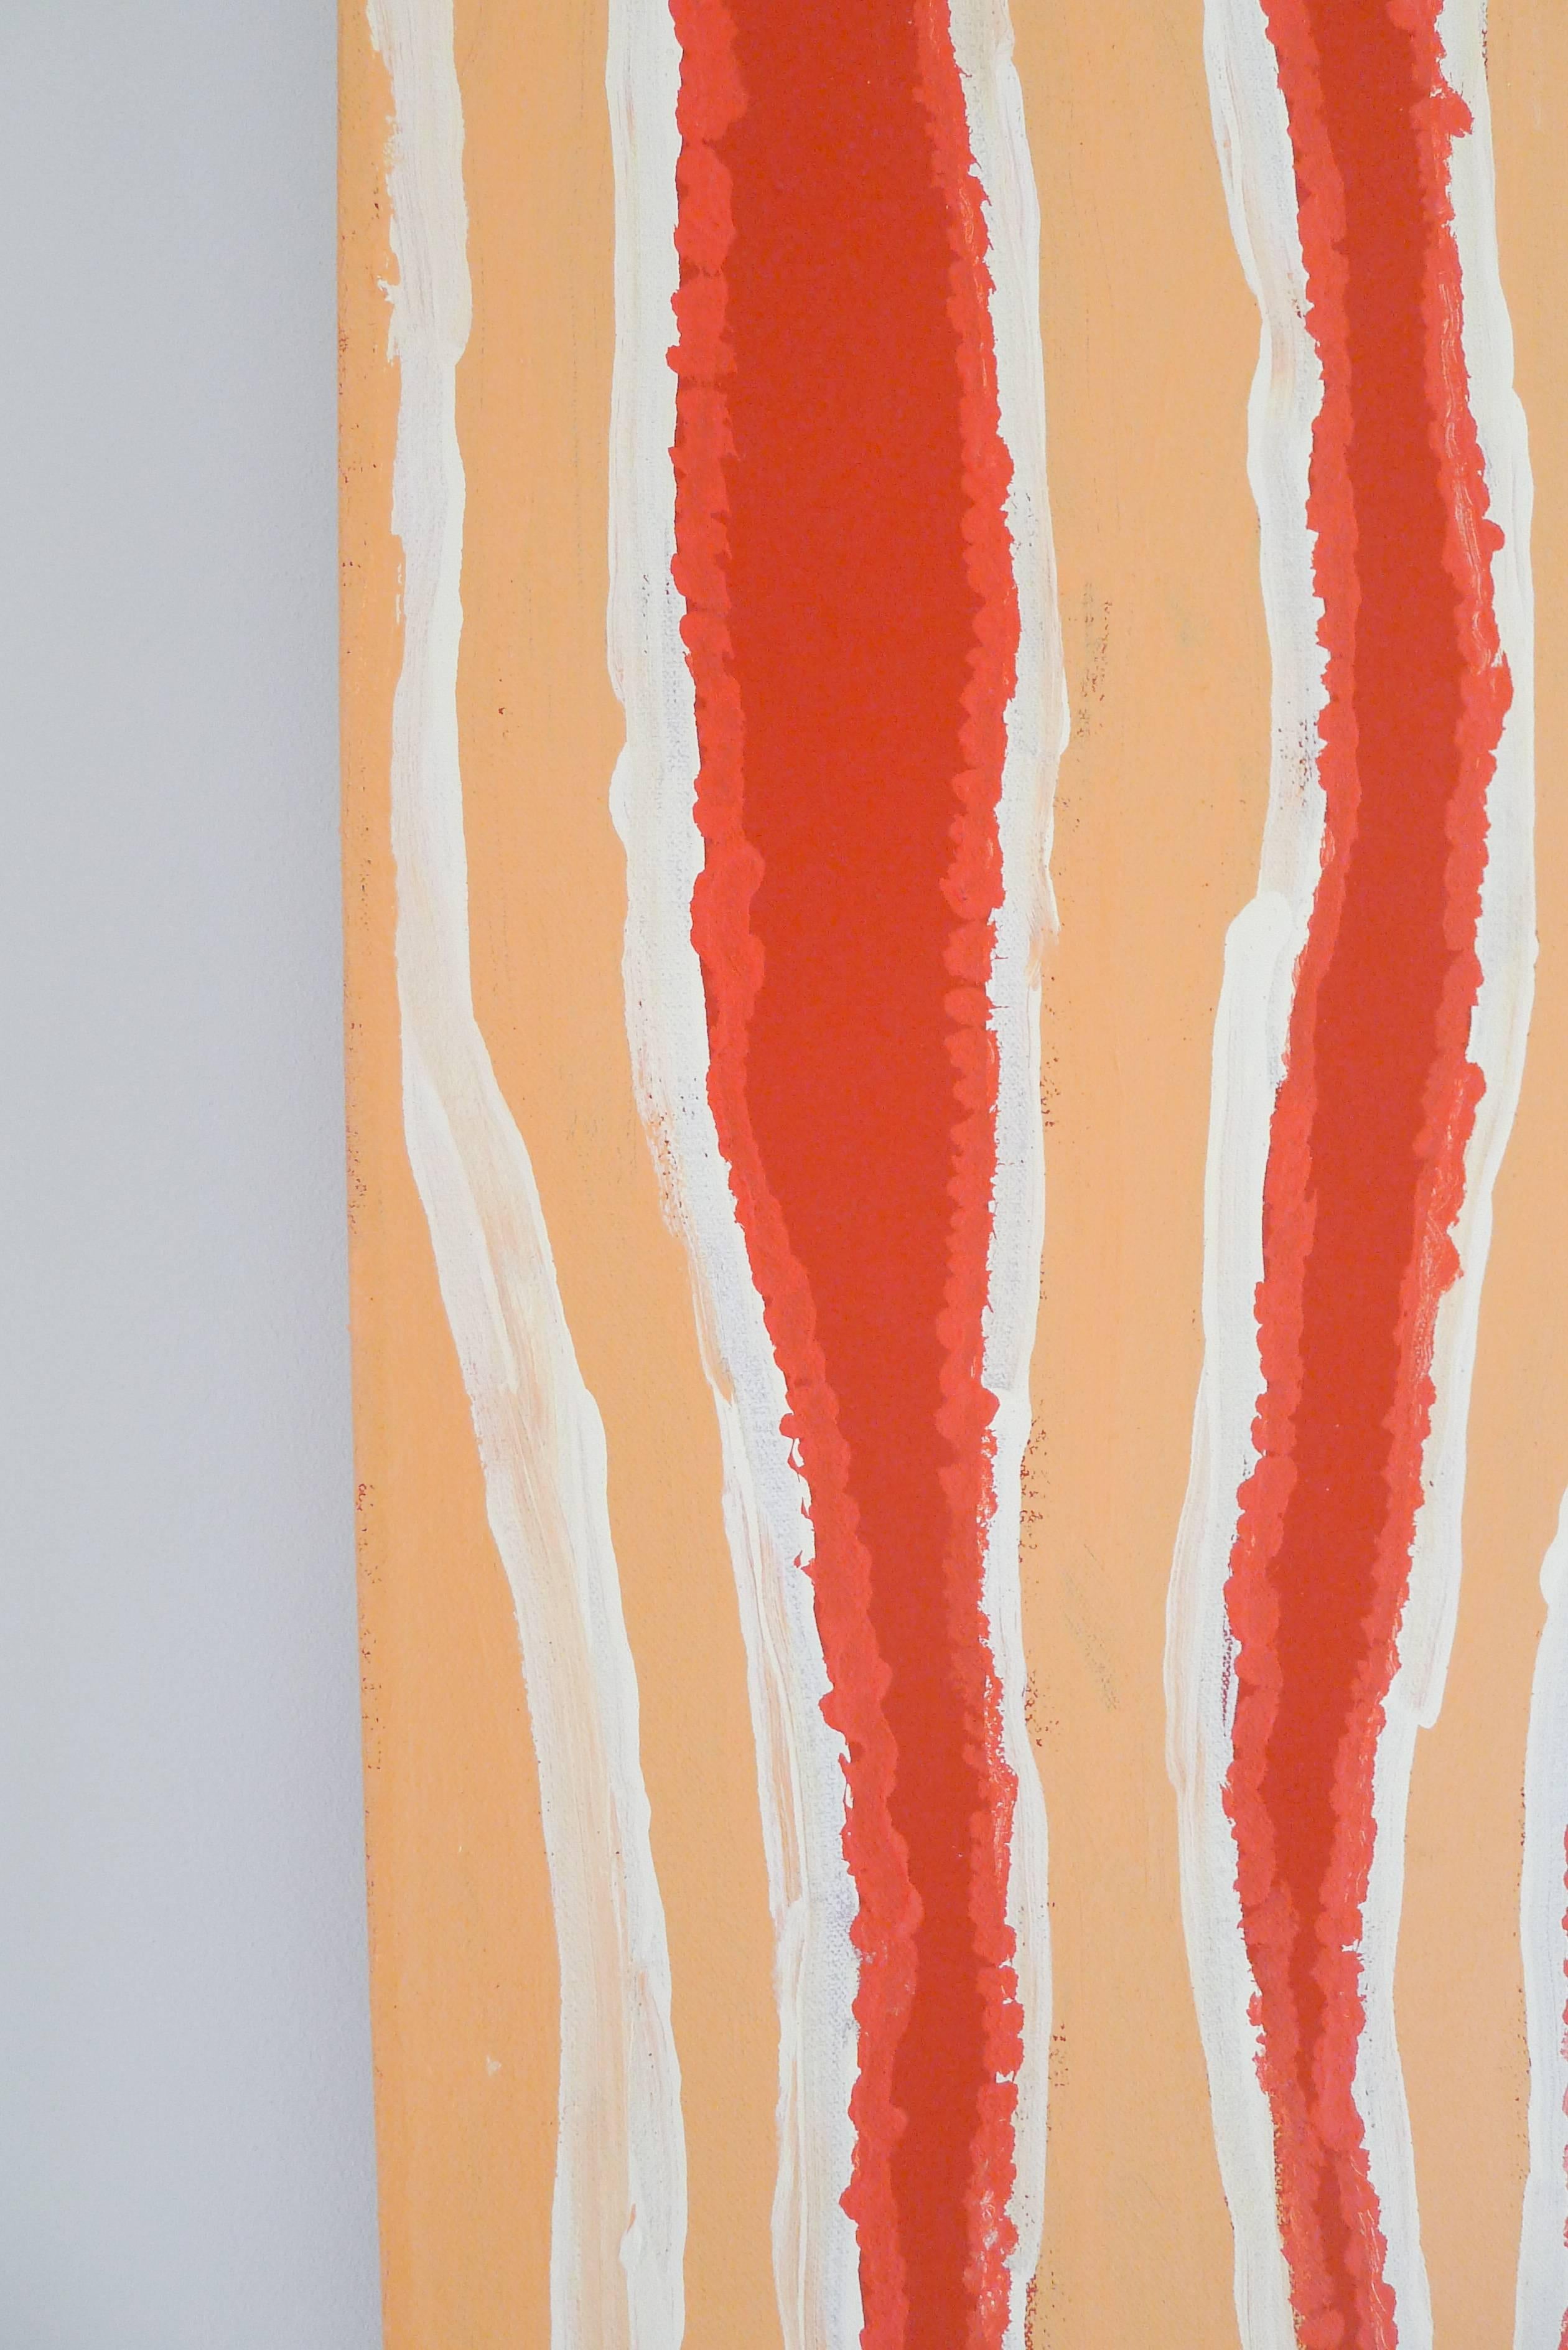 Tribal Warm Red and Orange Striped Australian Aboriginal Painting